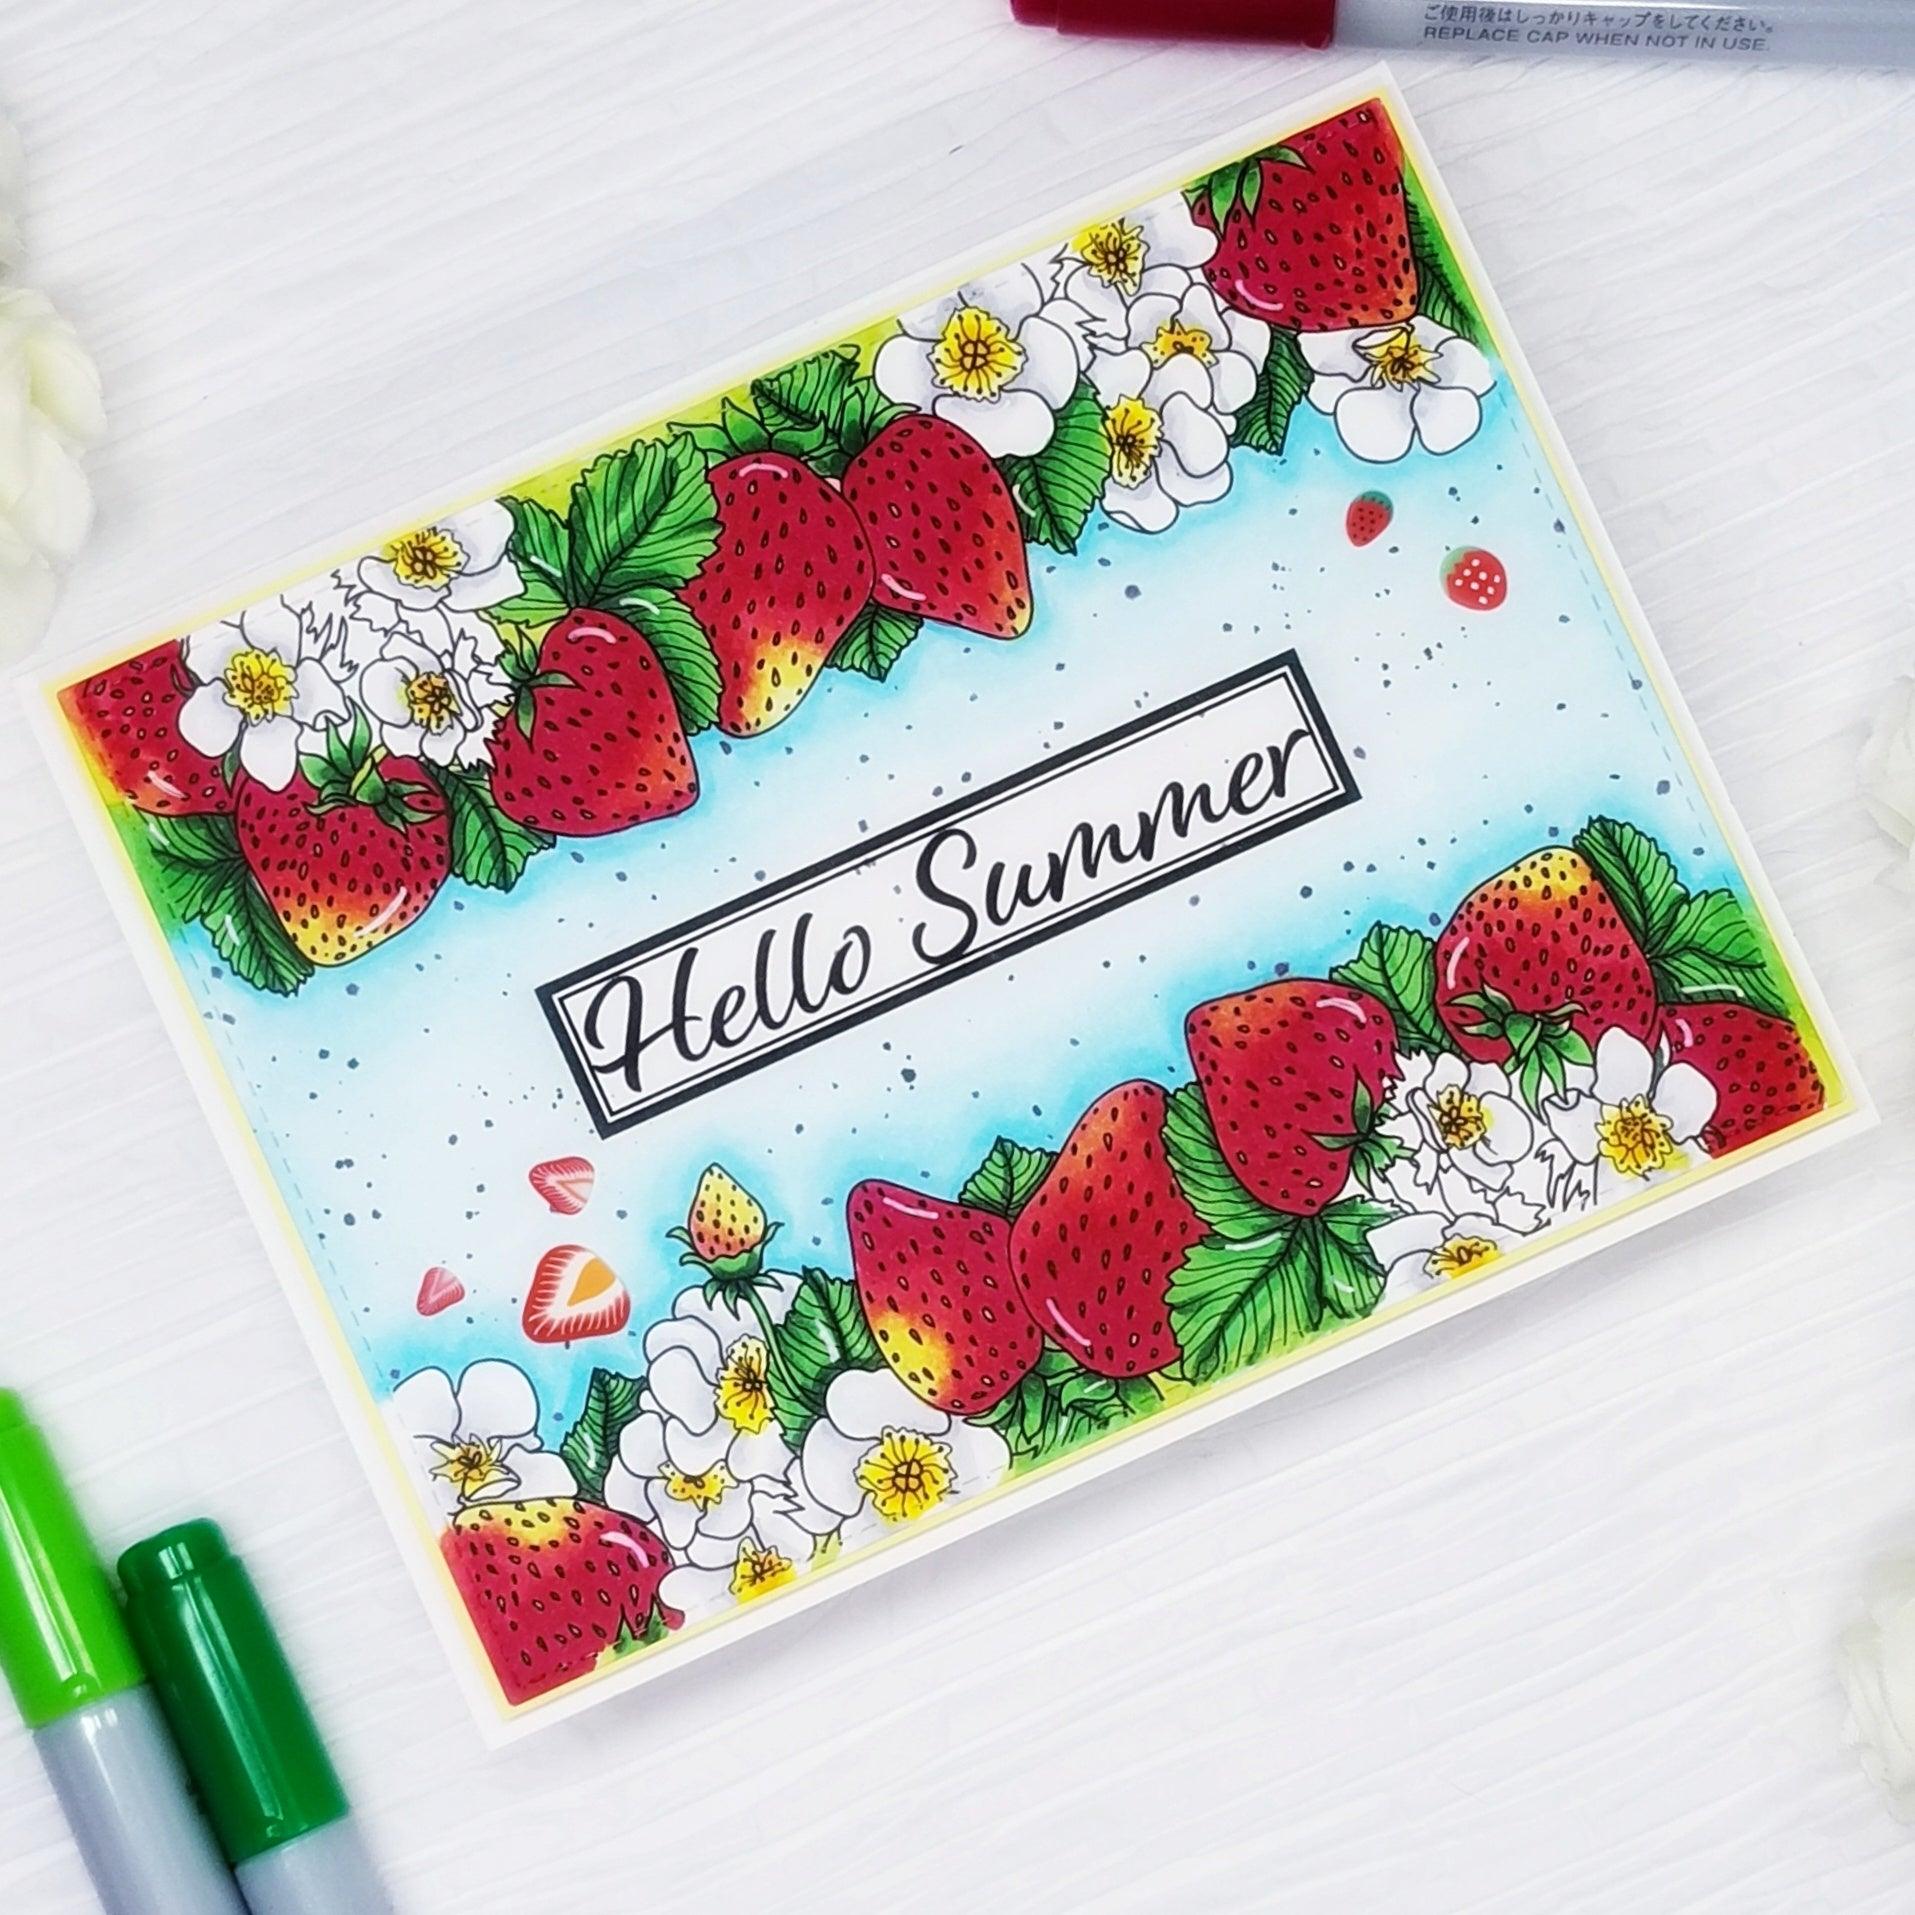 Strawberry Trimmings Digital Stamp - Alex Syberia Designs